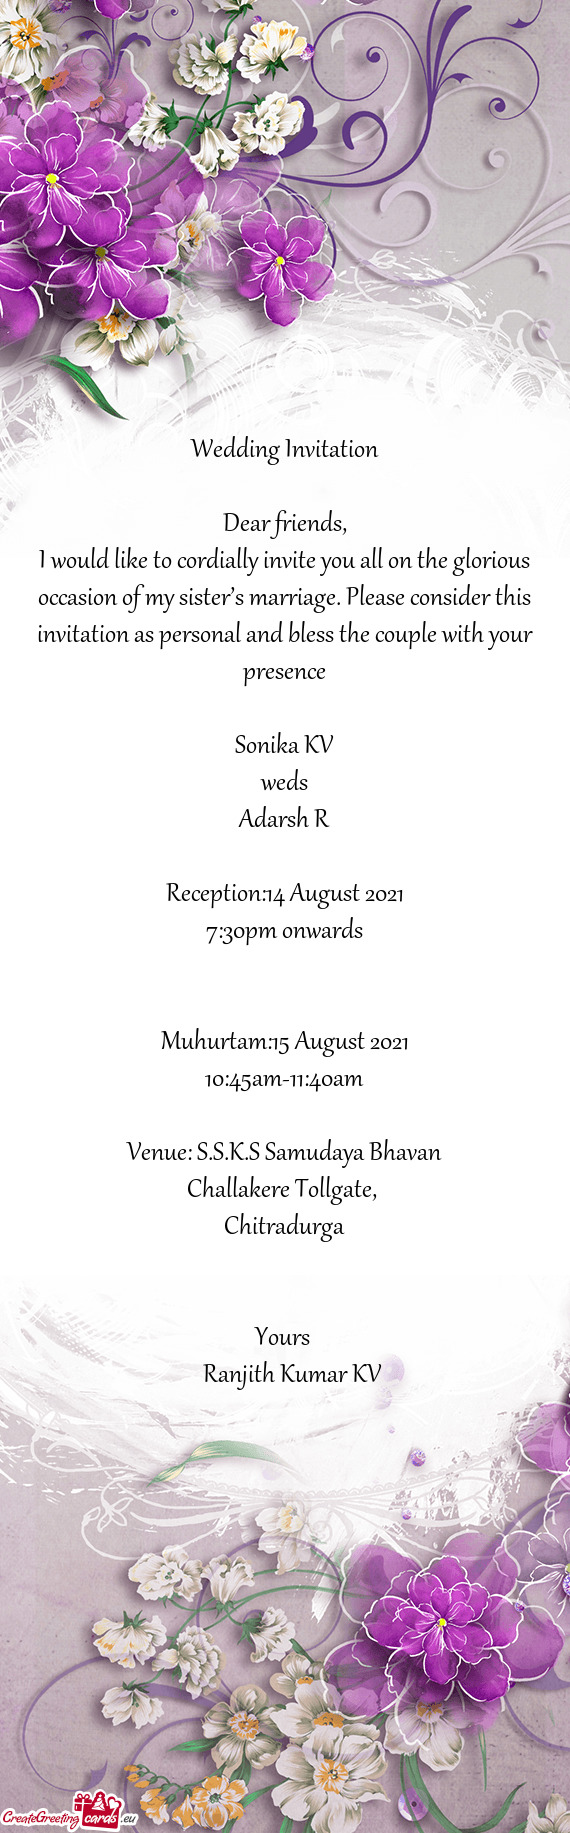 Venue: S.S.K.S Samudaya Bhavan